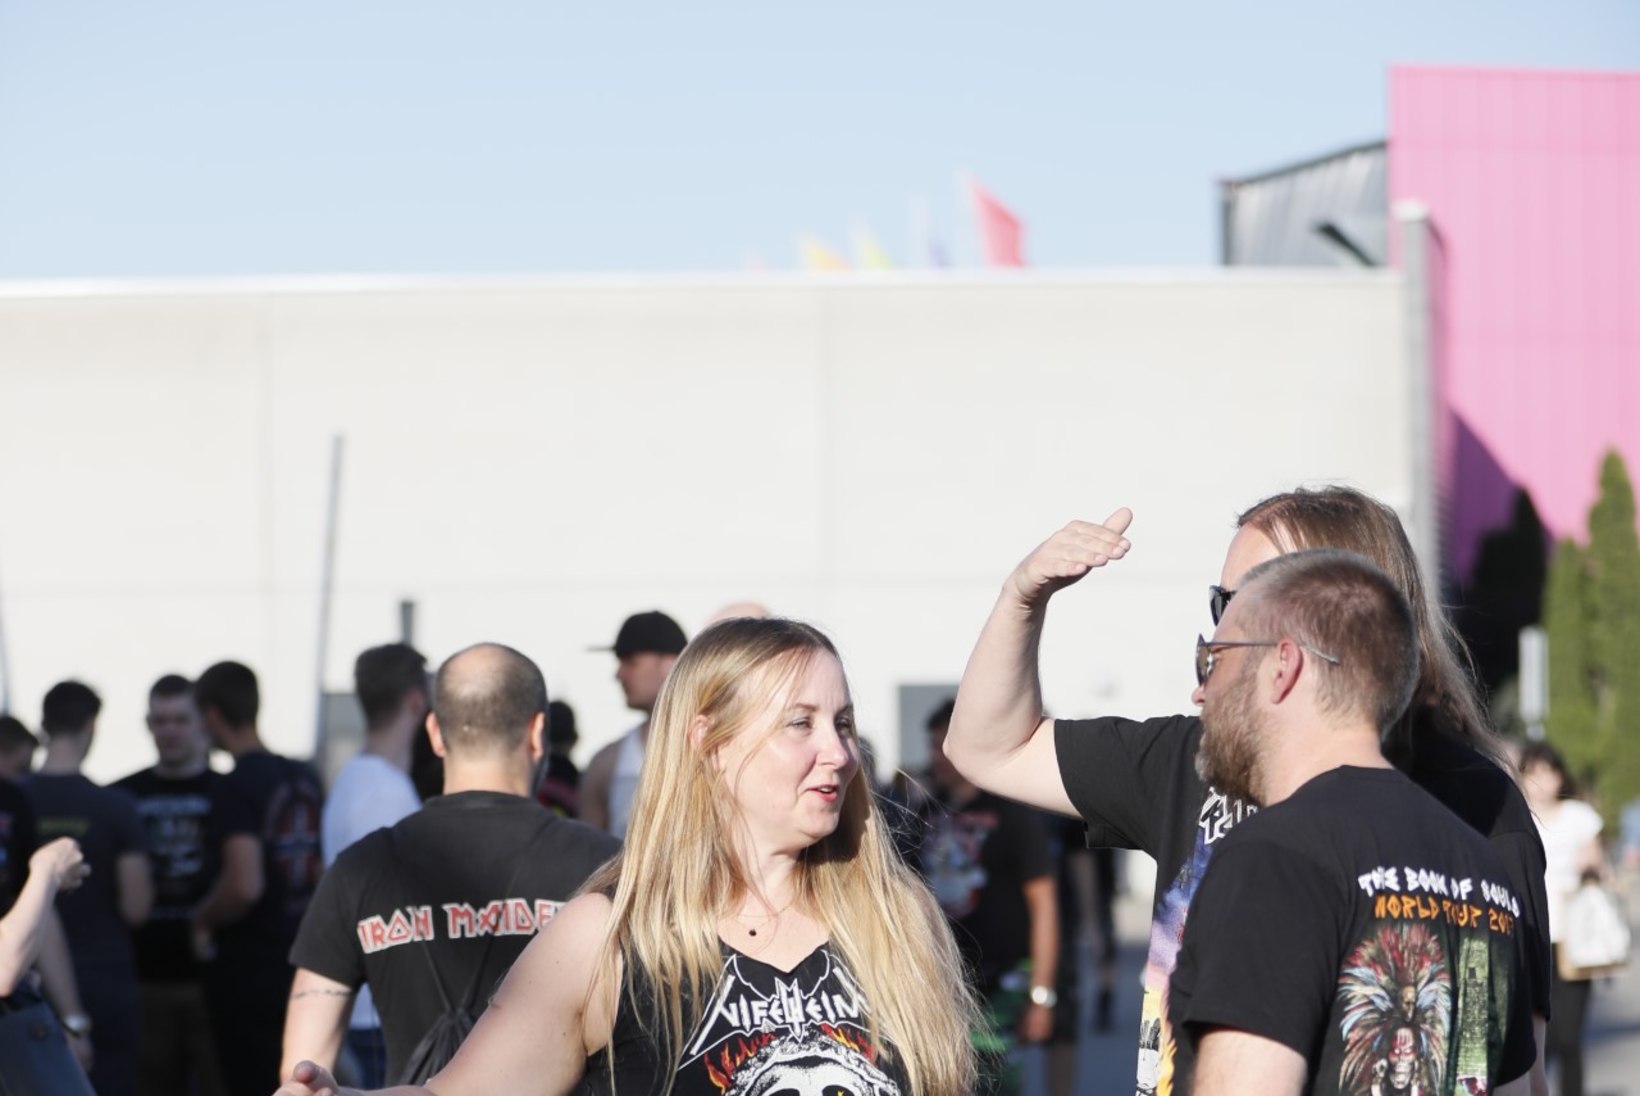 GALERII | Vaata, kes tulid hevibändi Iron Maiden kontserdile